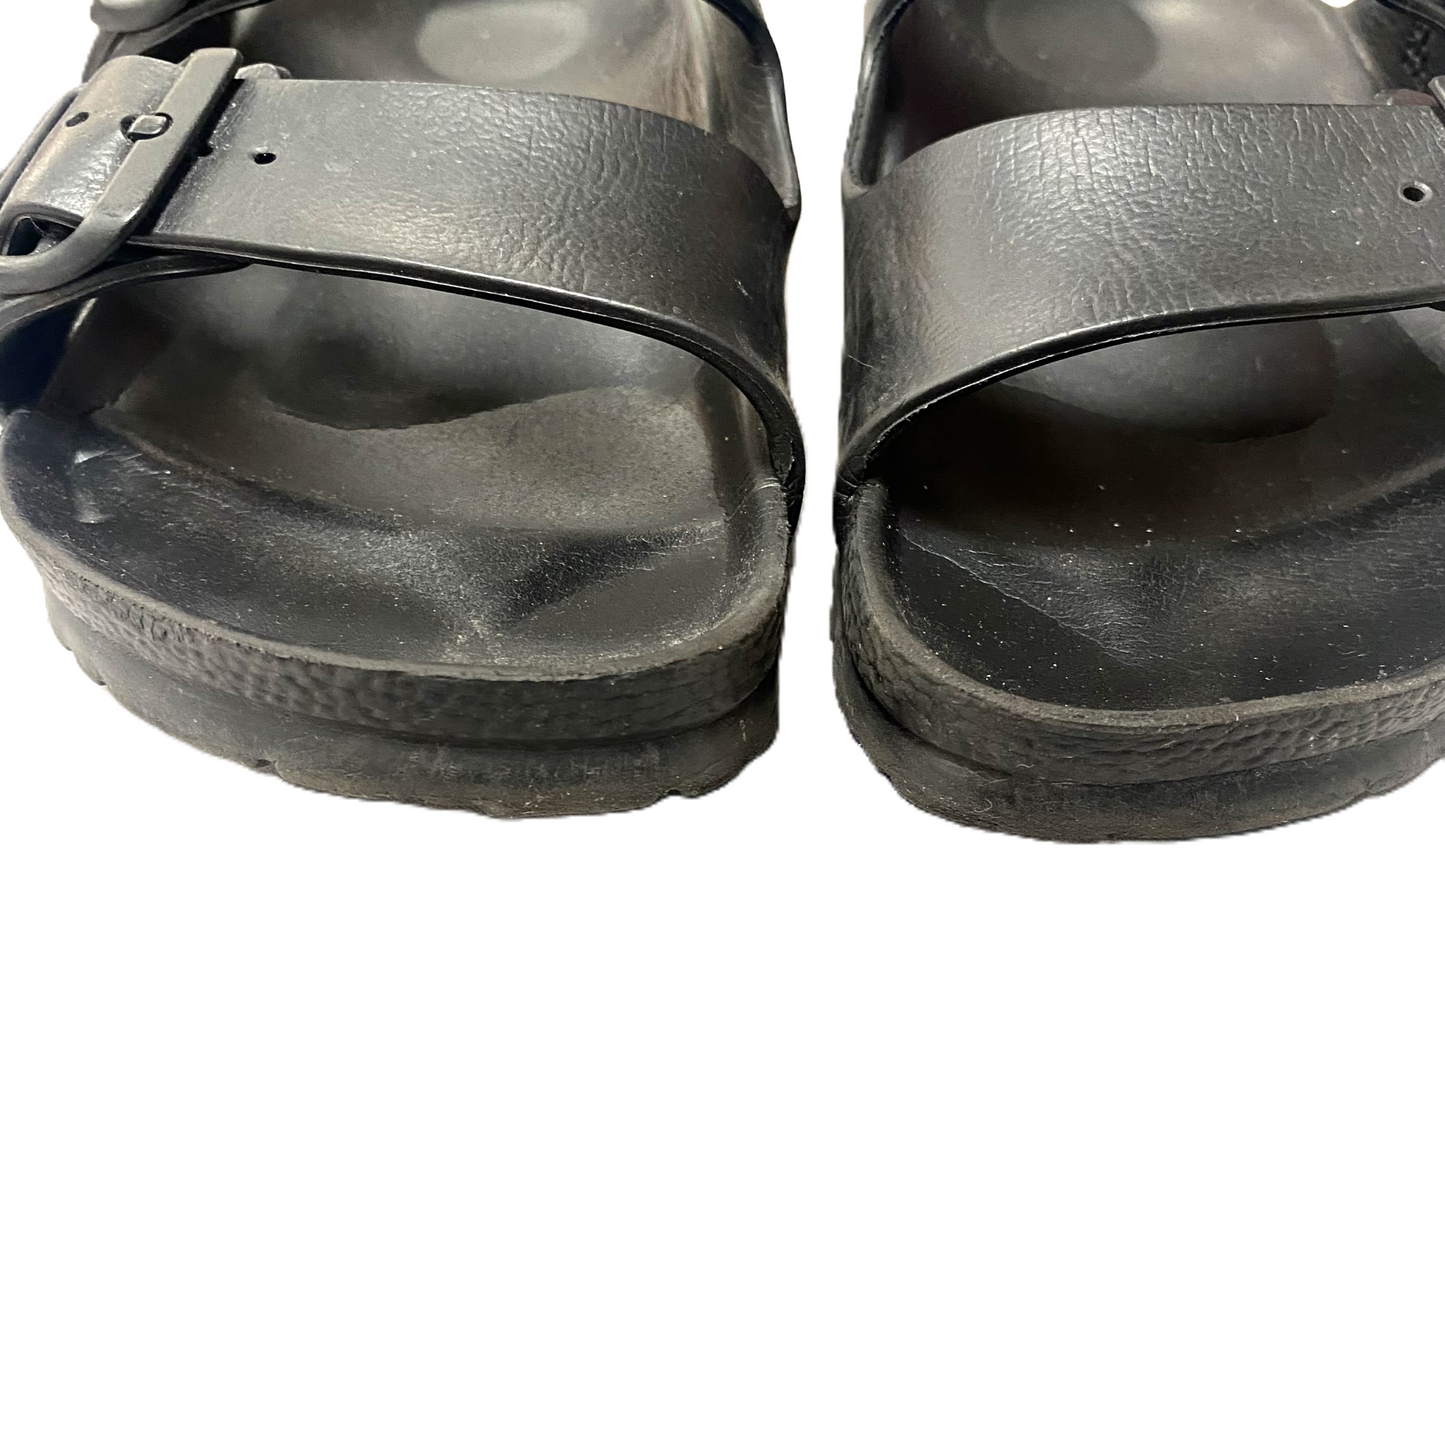 Sandals Flats By Birkenstock  Size: 6.5